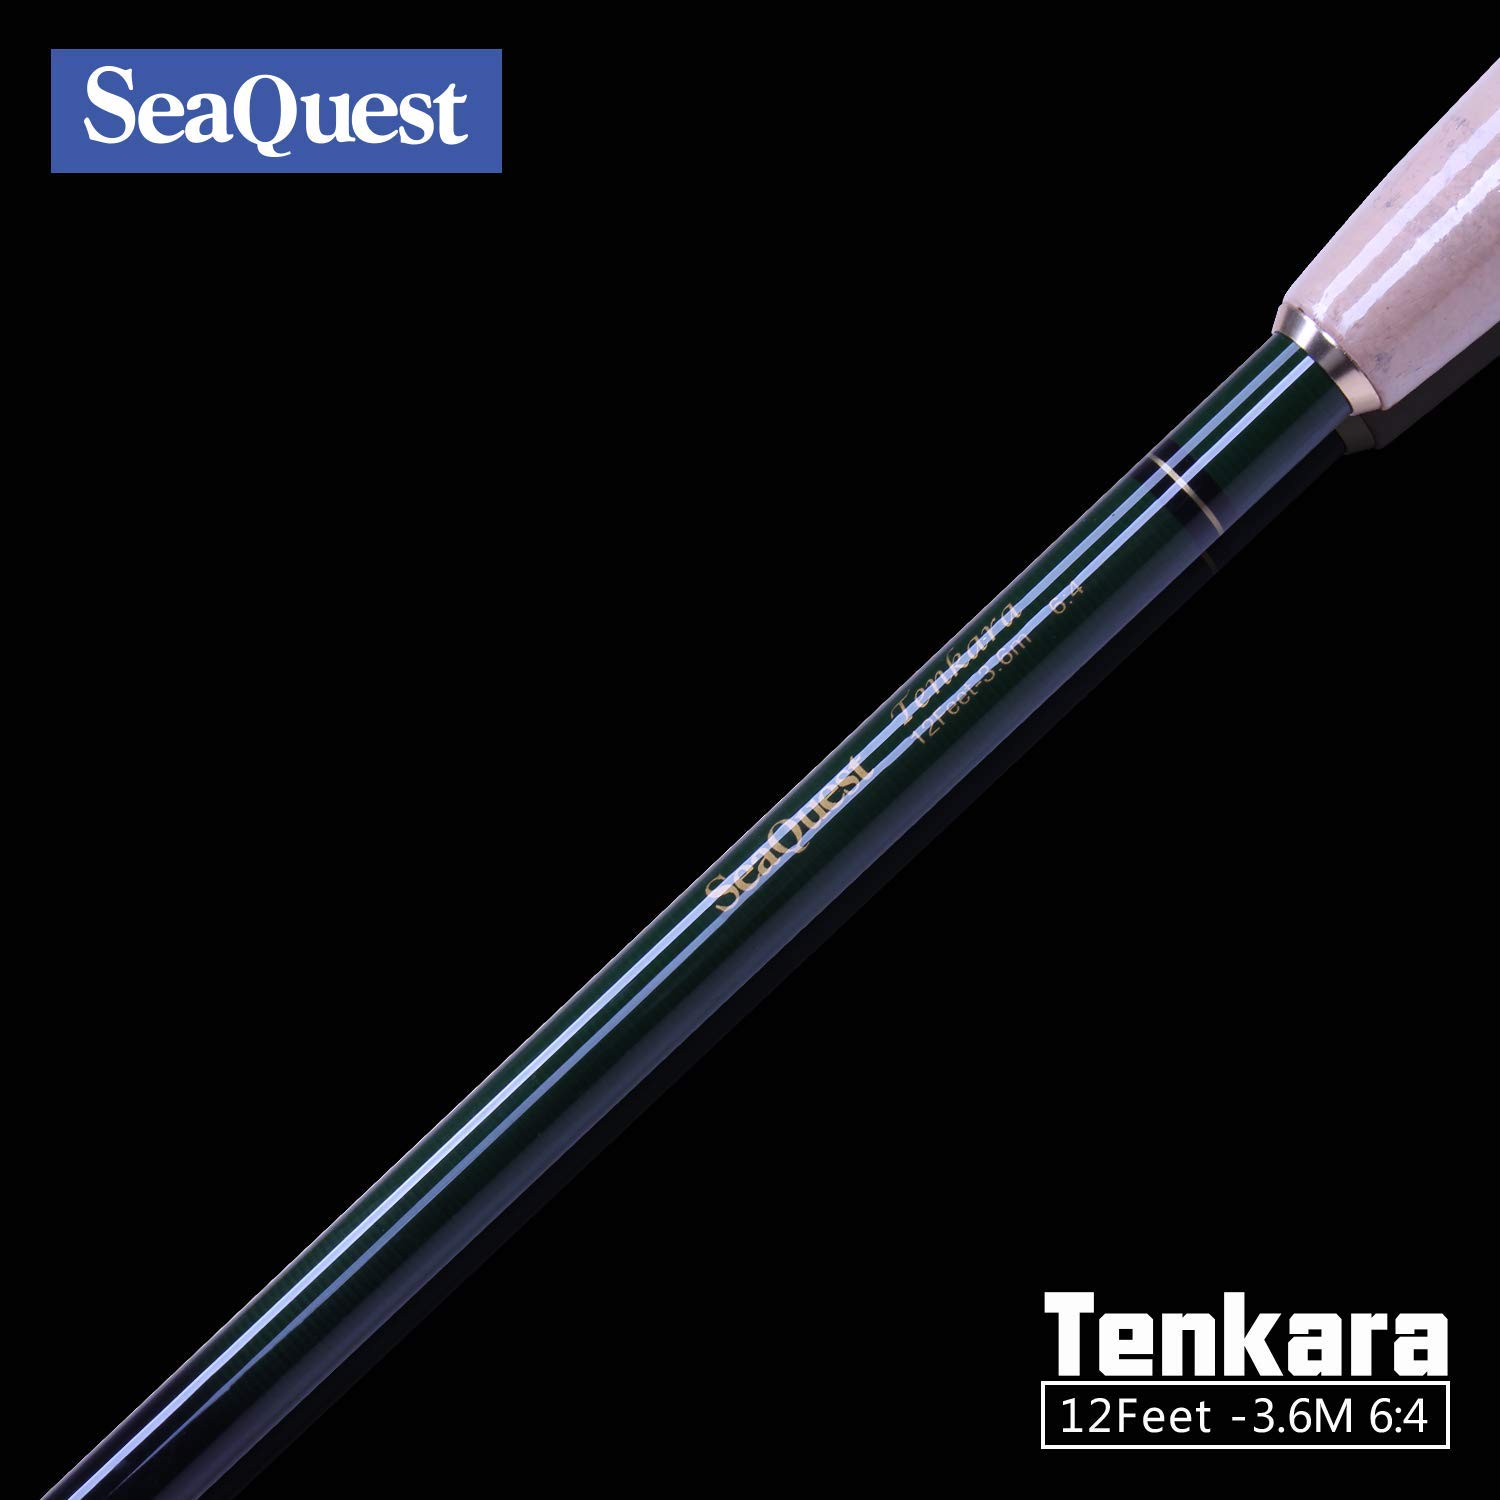 SeaQuest Tenkara 6:4 12ft Canna da Pesca TG kit 2 12Ft 6:4